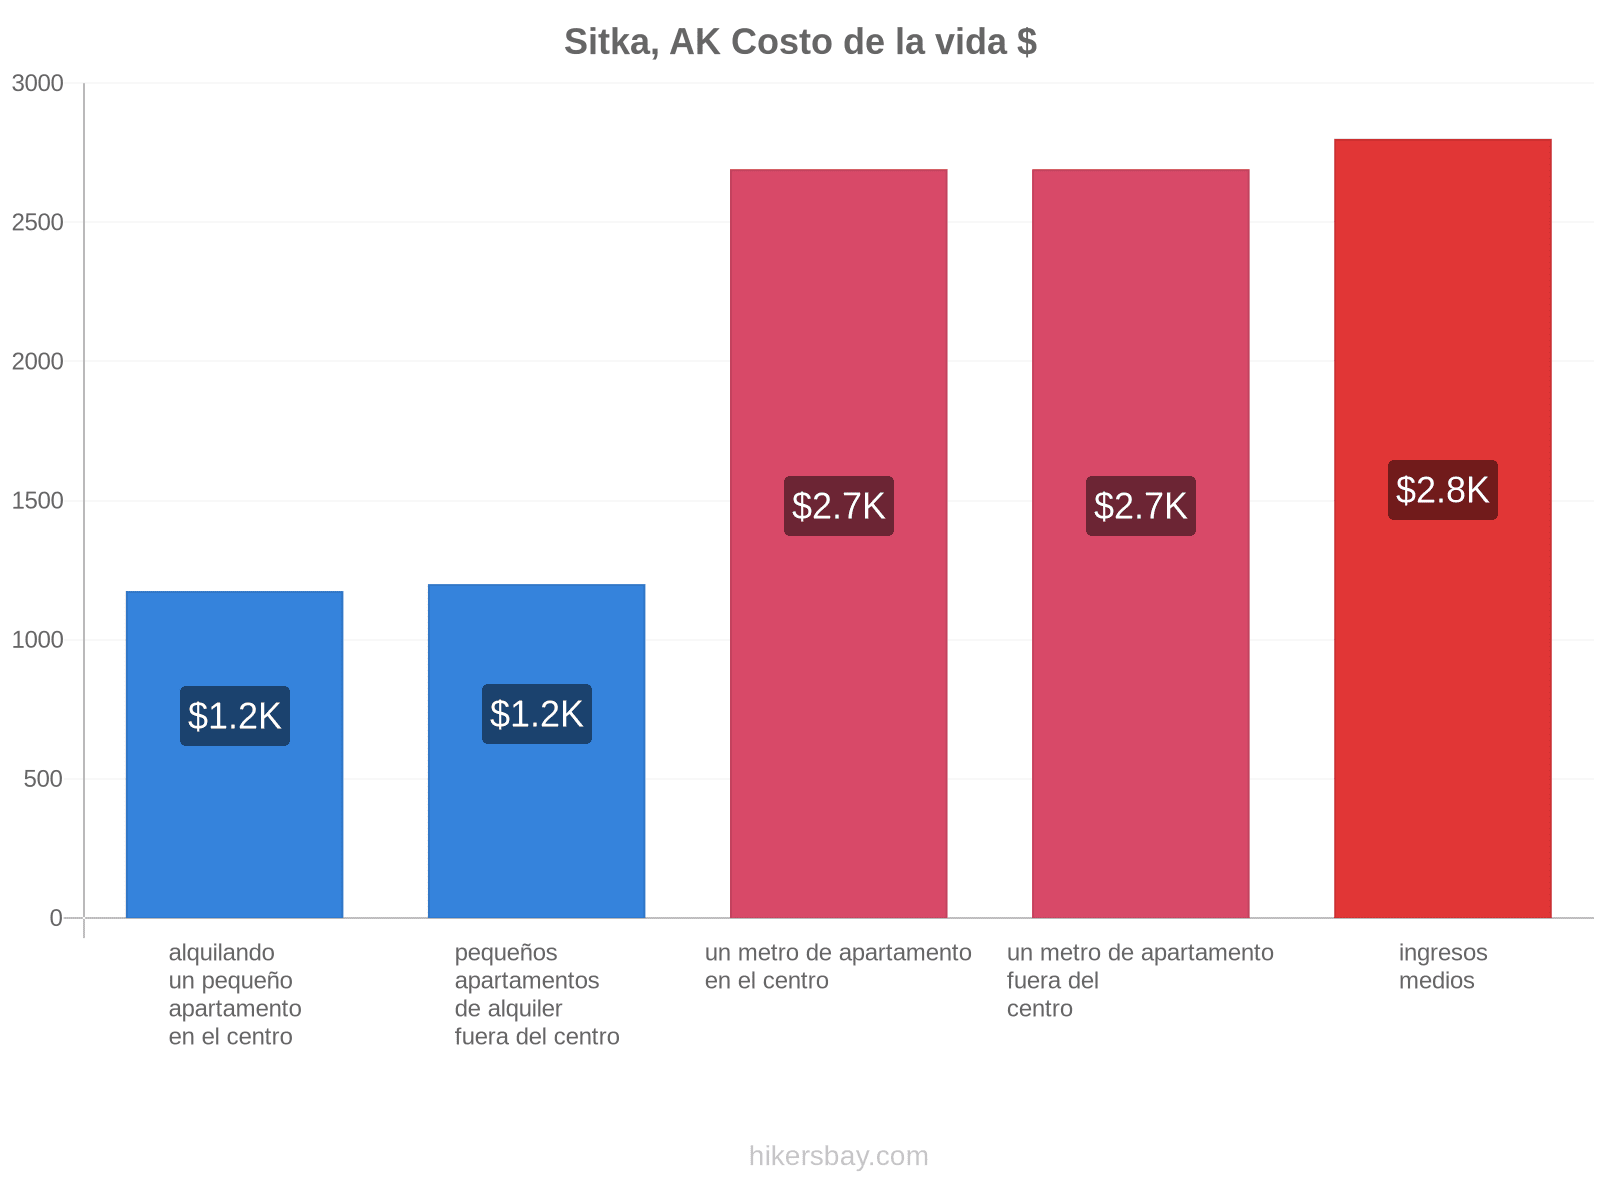 Sitka, AK costo de la vida hikersbay.com